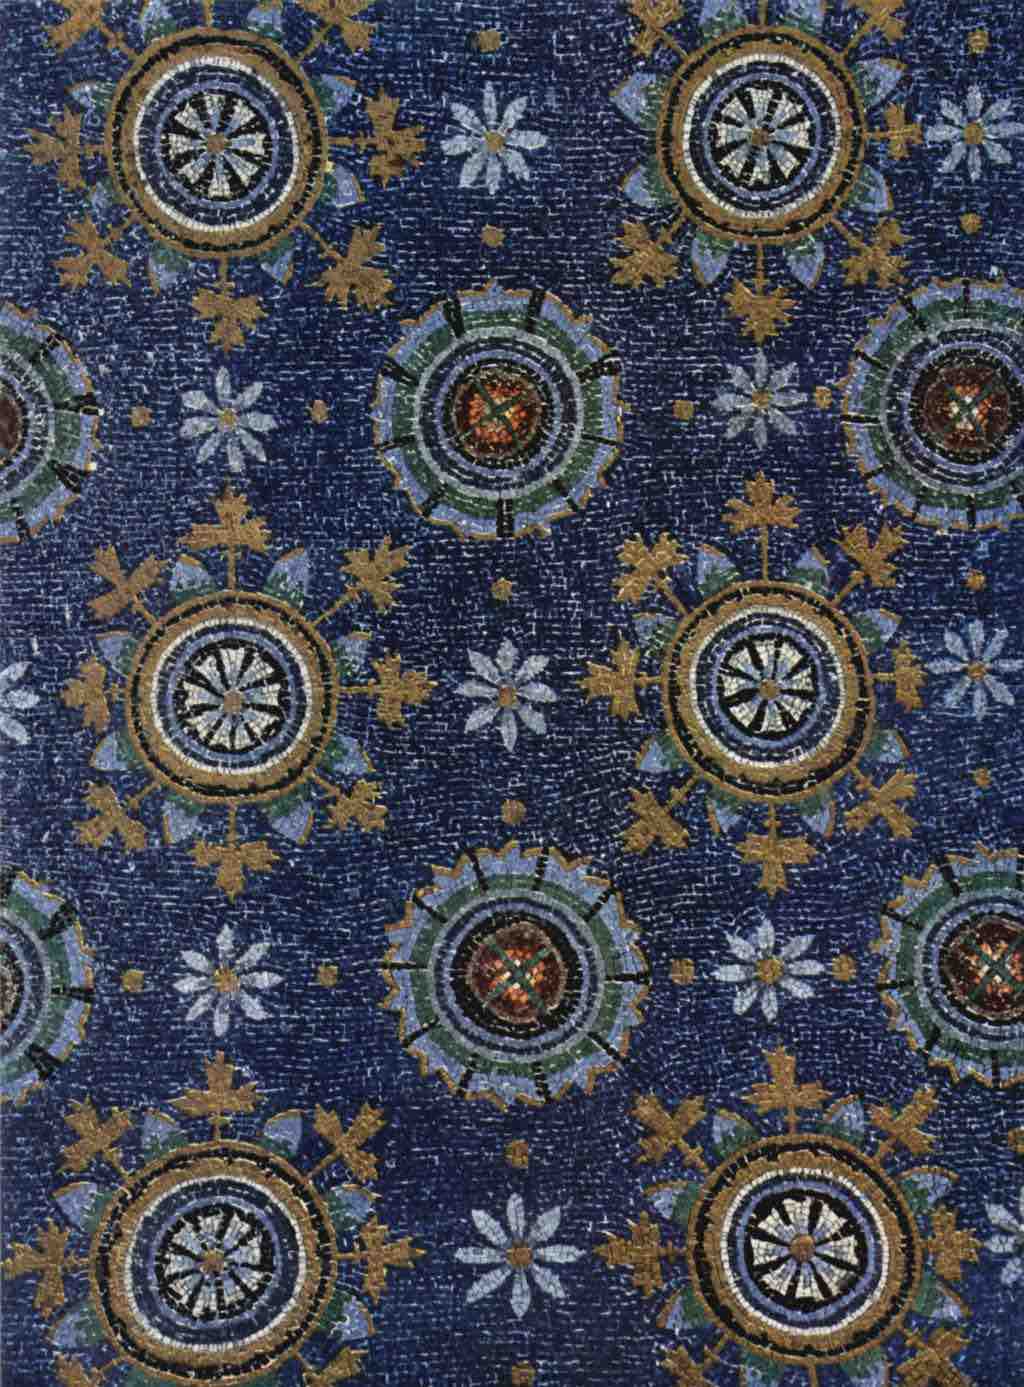 Ceiling Mosaic at the Mausoleum of Galla Placidia